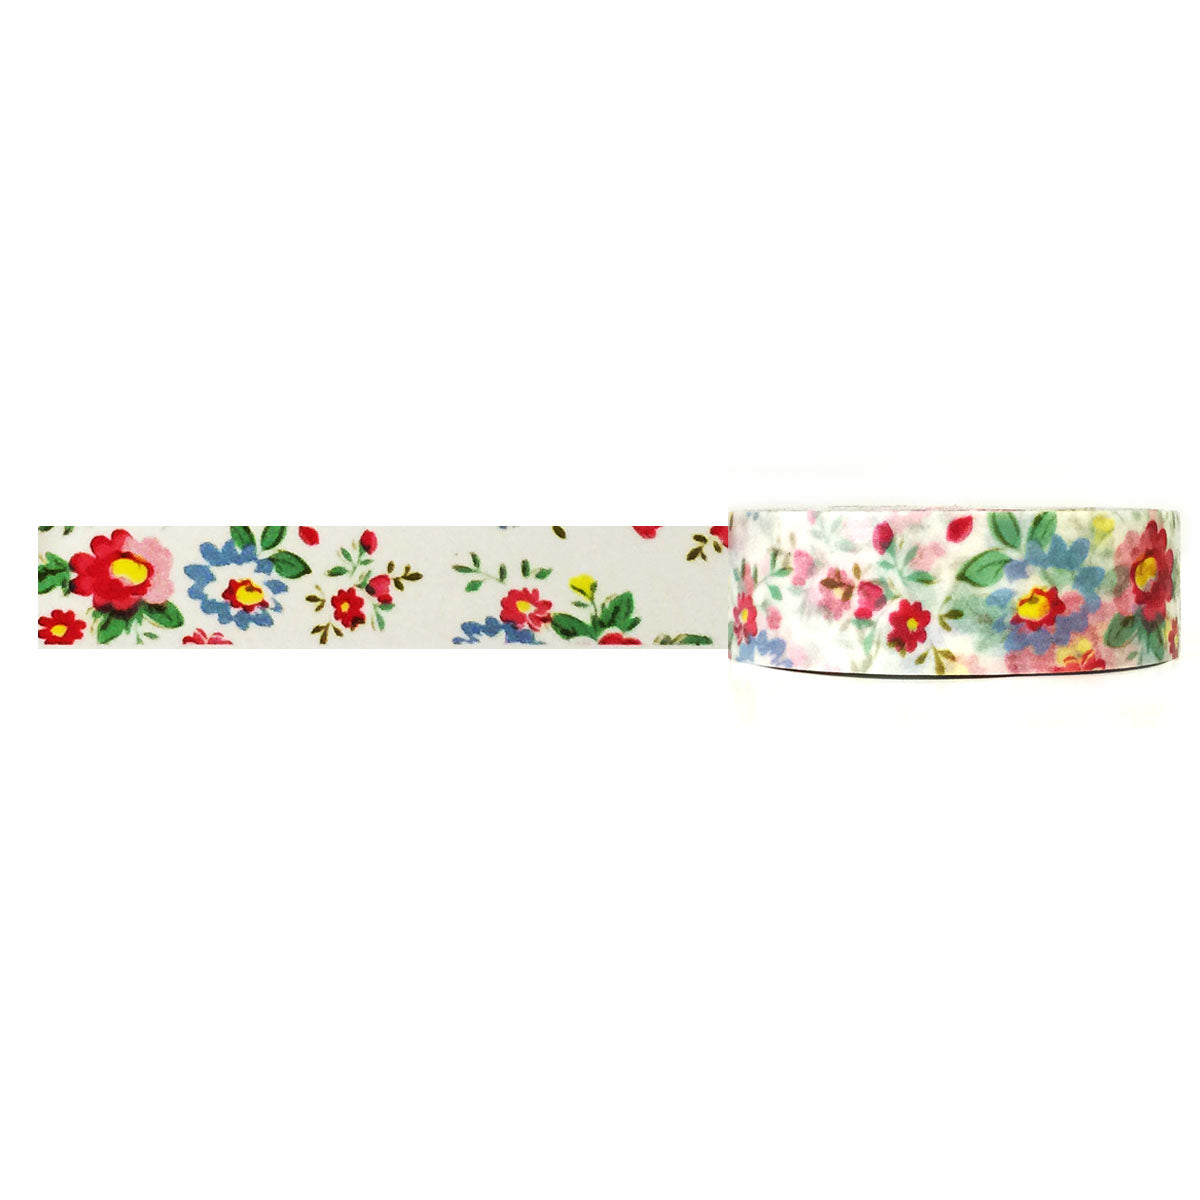 Wrapables Colorful Patterns Washi Masking Tape